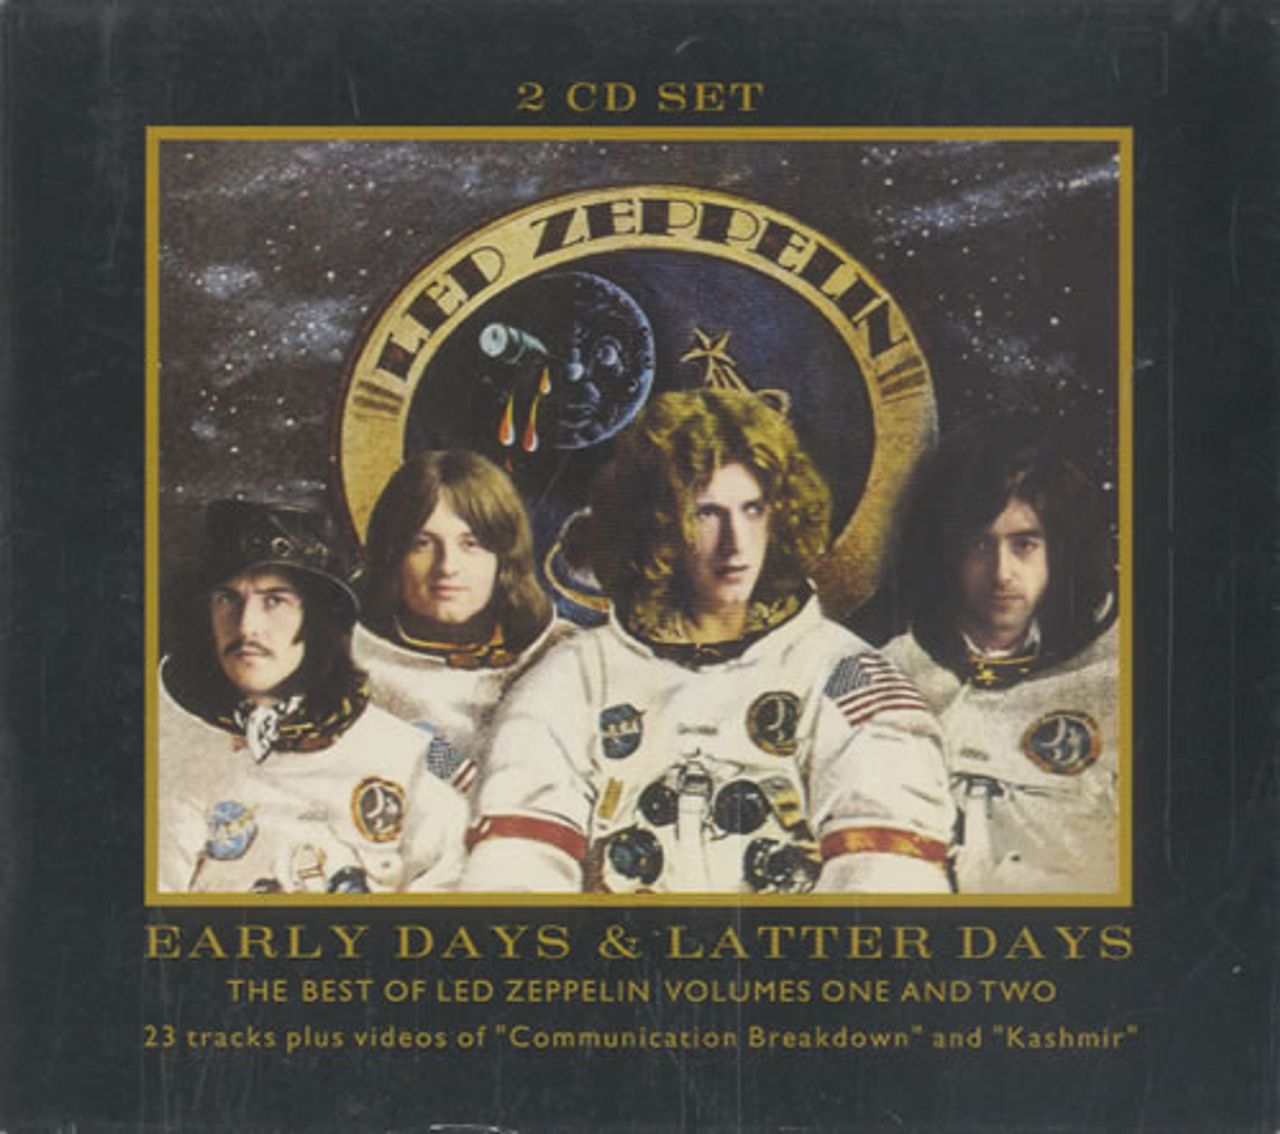 Early Days / Latter Days US 2-CD album — RareVinyl.com